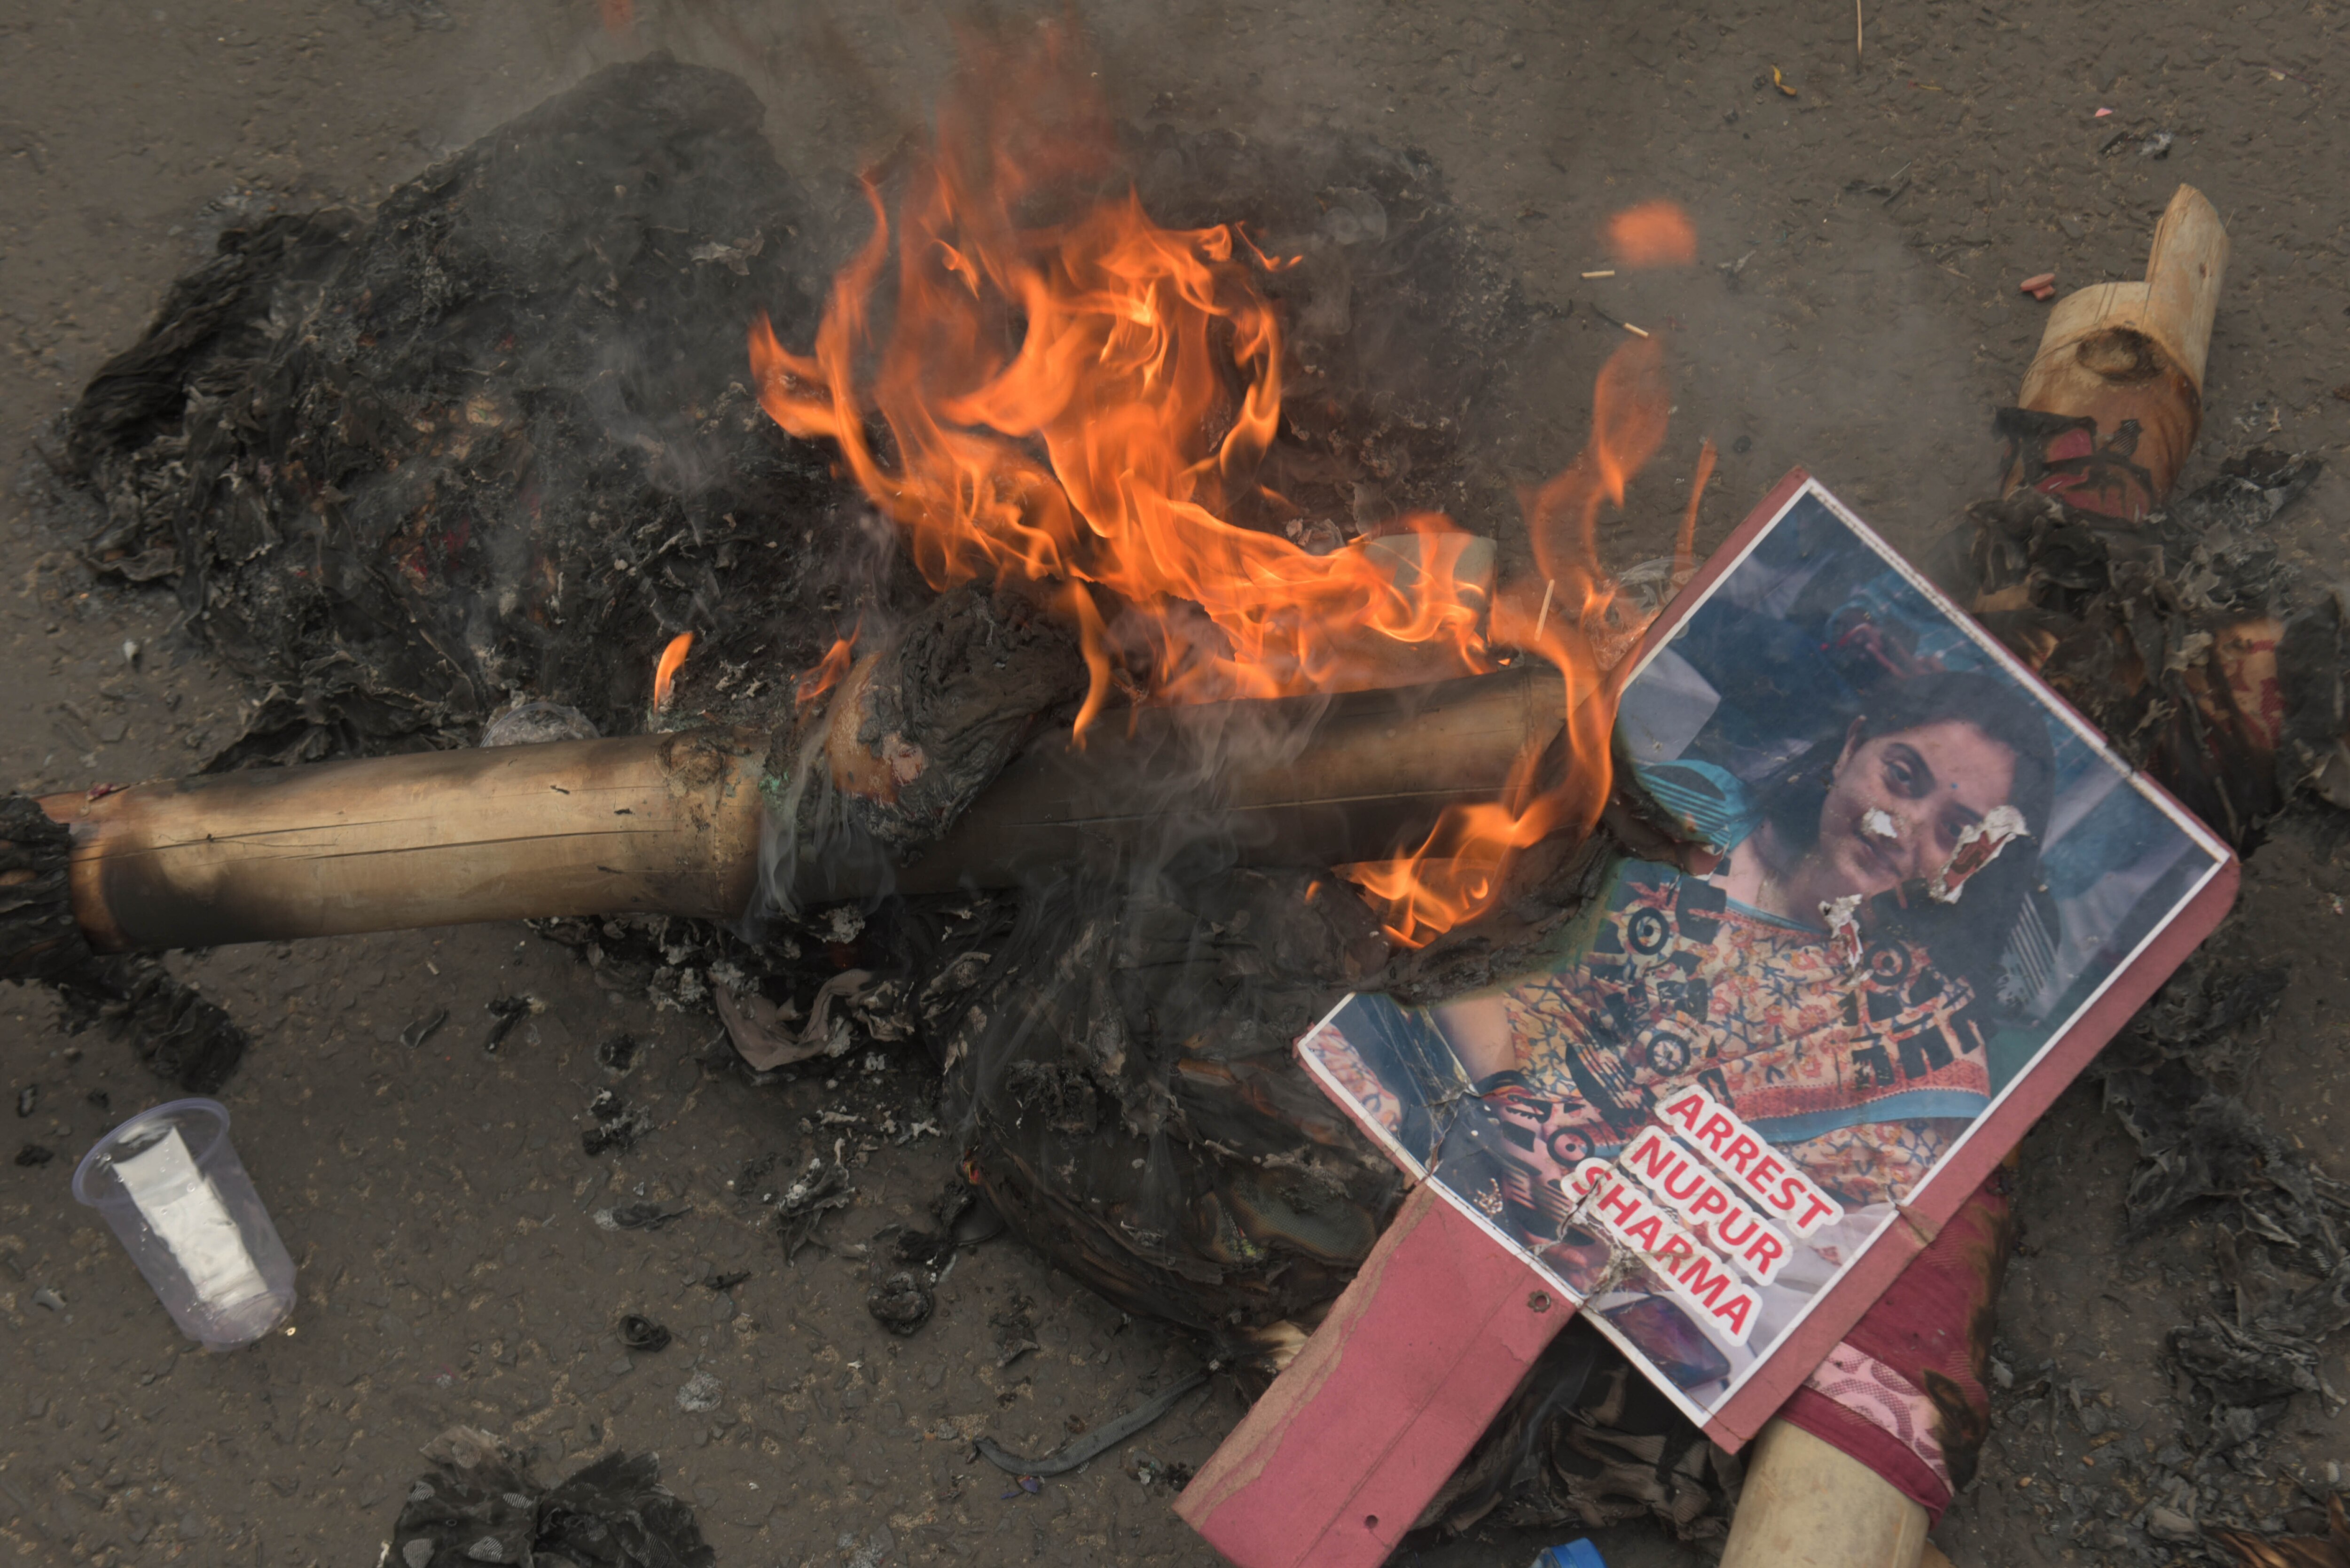 Members of the Muslims community burn an image of now suspended BJP spokesperson Nupur Sharma in Kolkata, India.